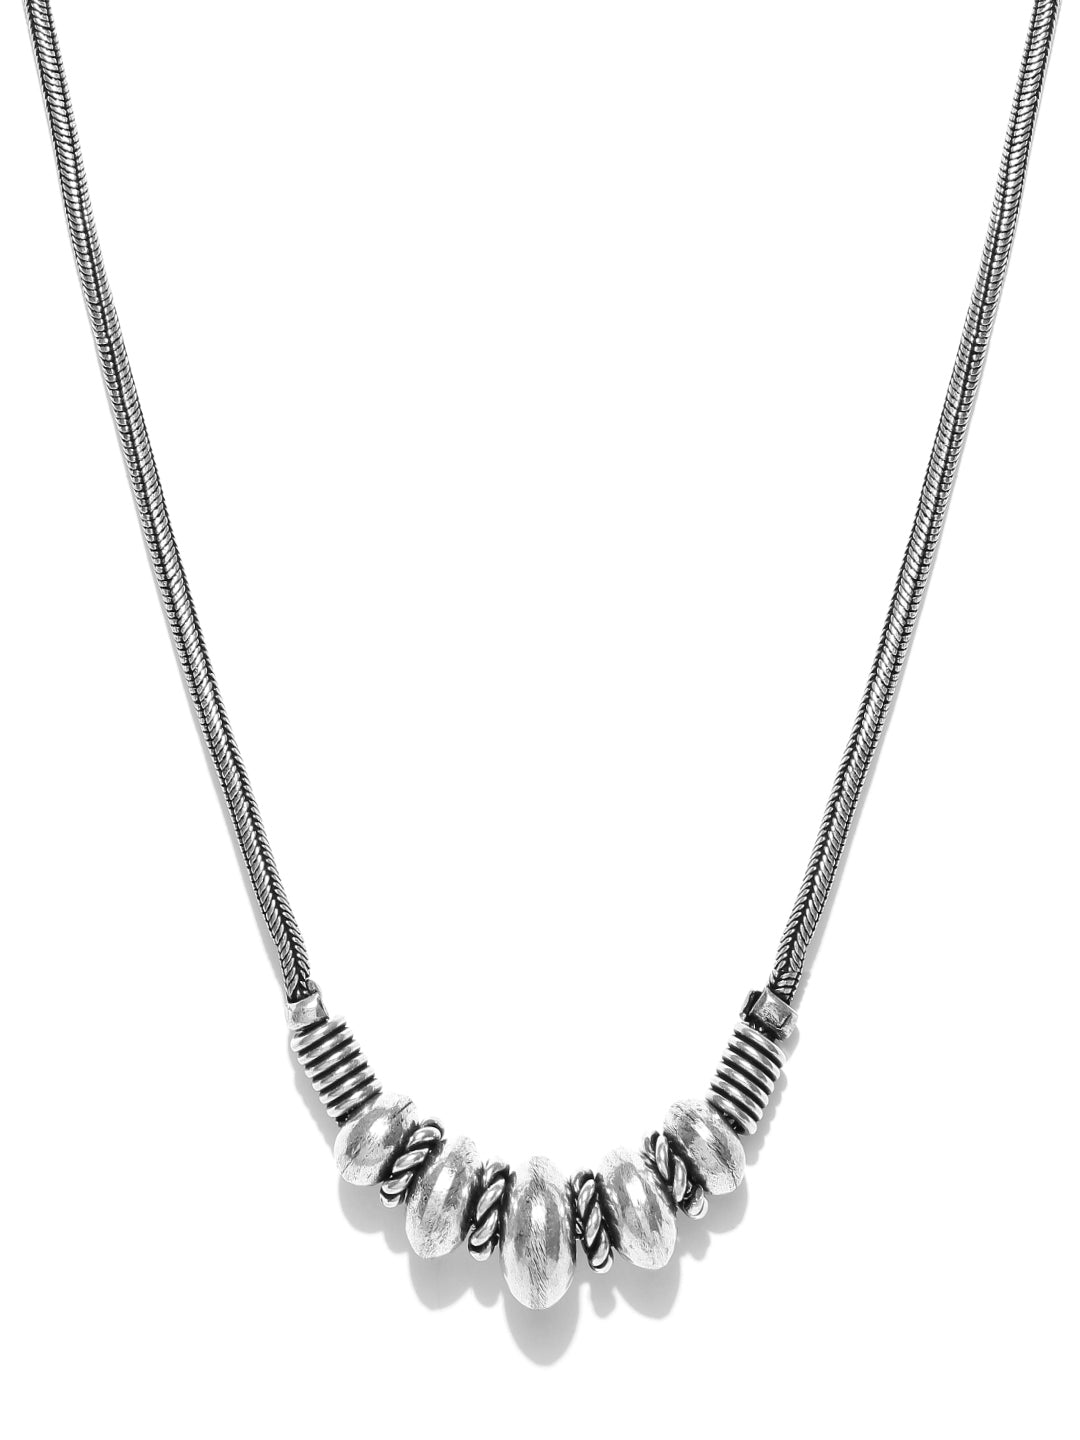 German Silver Oxidised Necklace